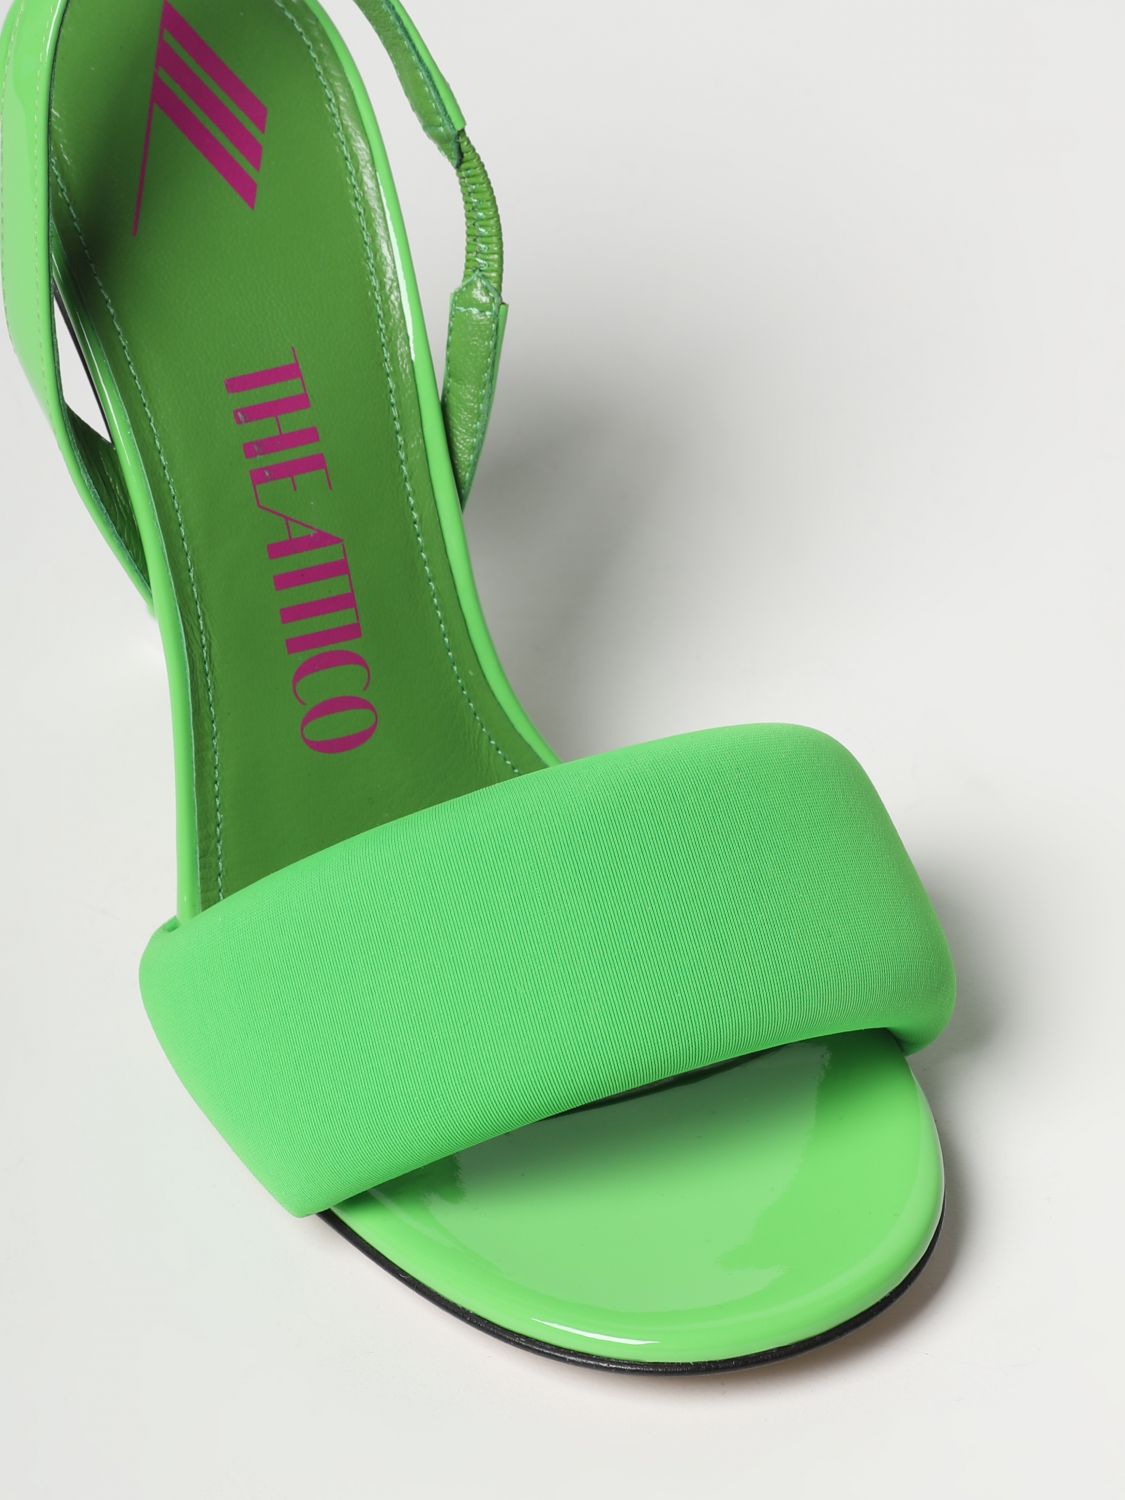 The Attico Baumwolle Leder sandalen in Grün Damen Schuhe Absätze Sandaletten 